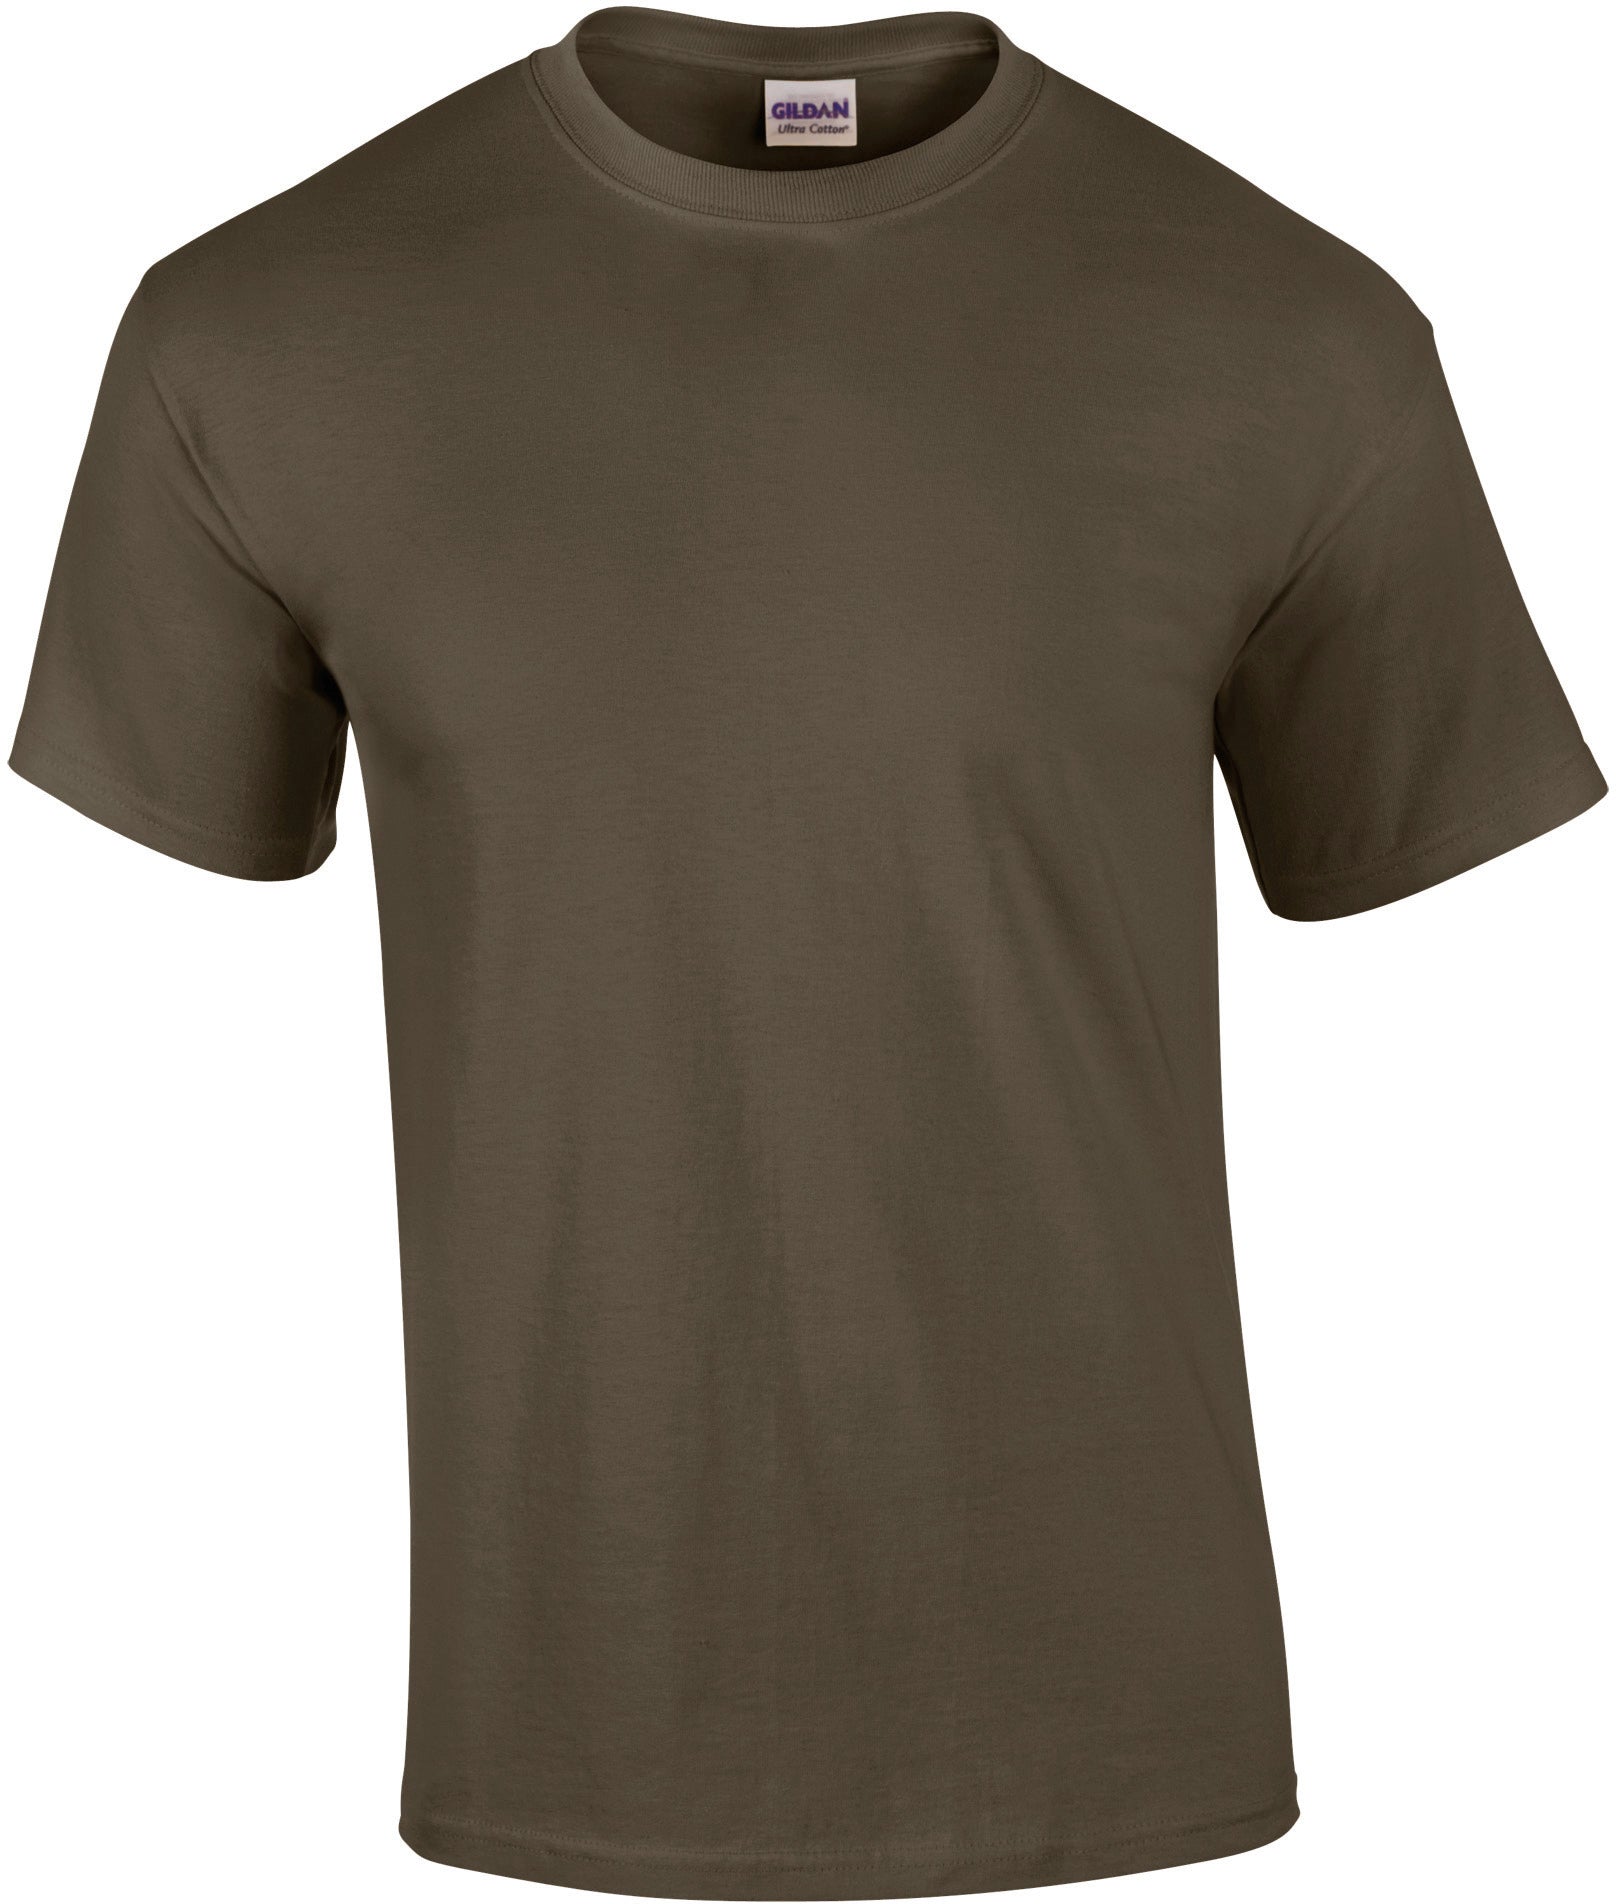 Hom Classic T-Shirt Maillot de Corps Homme